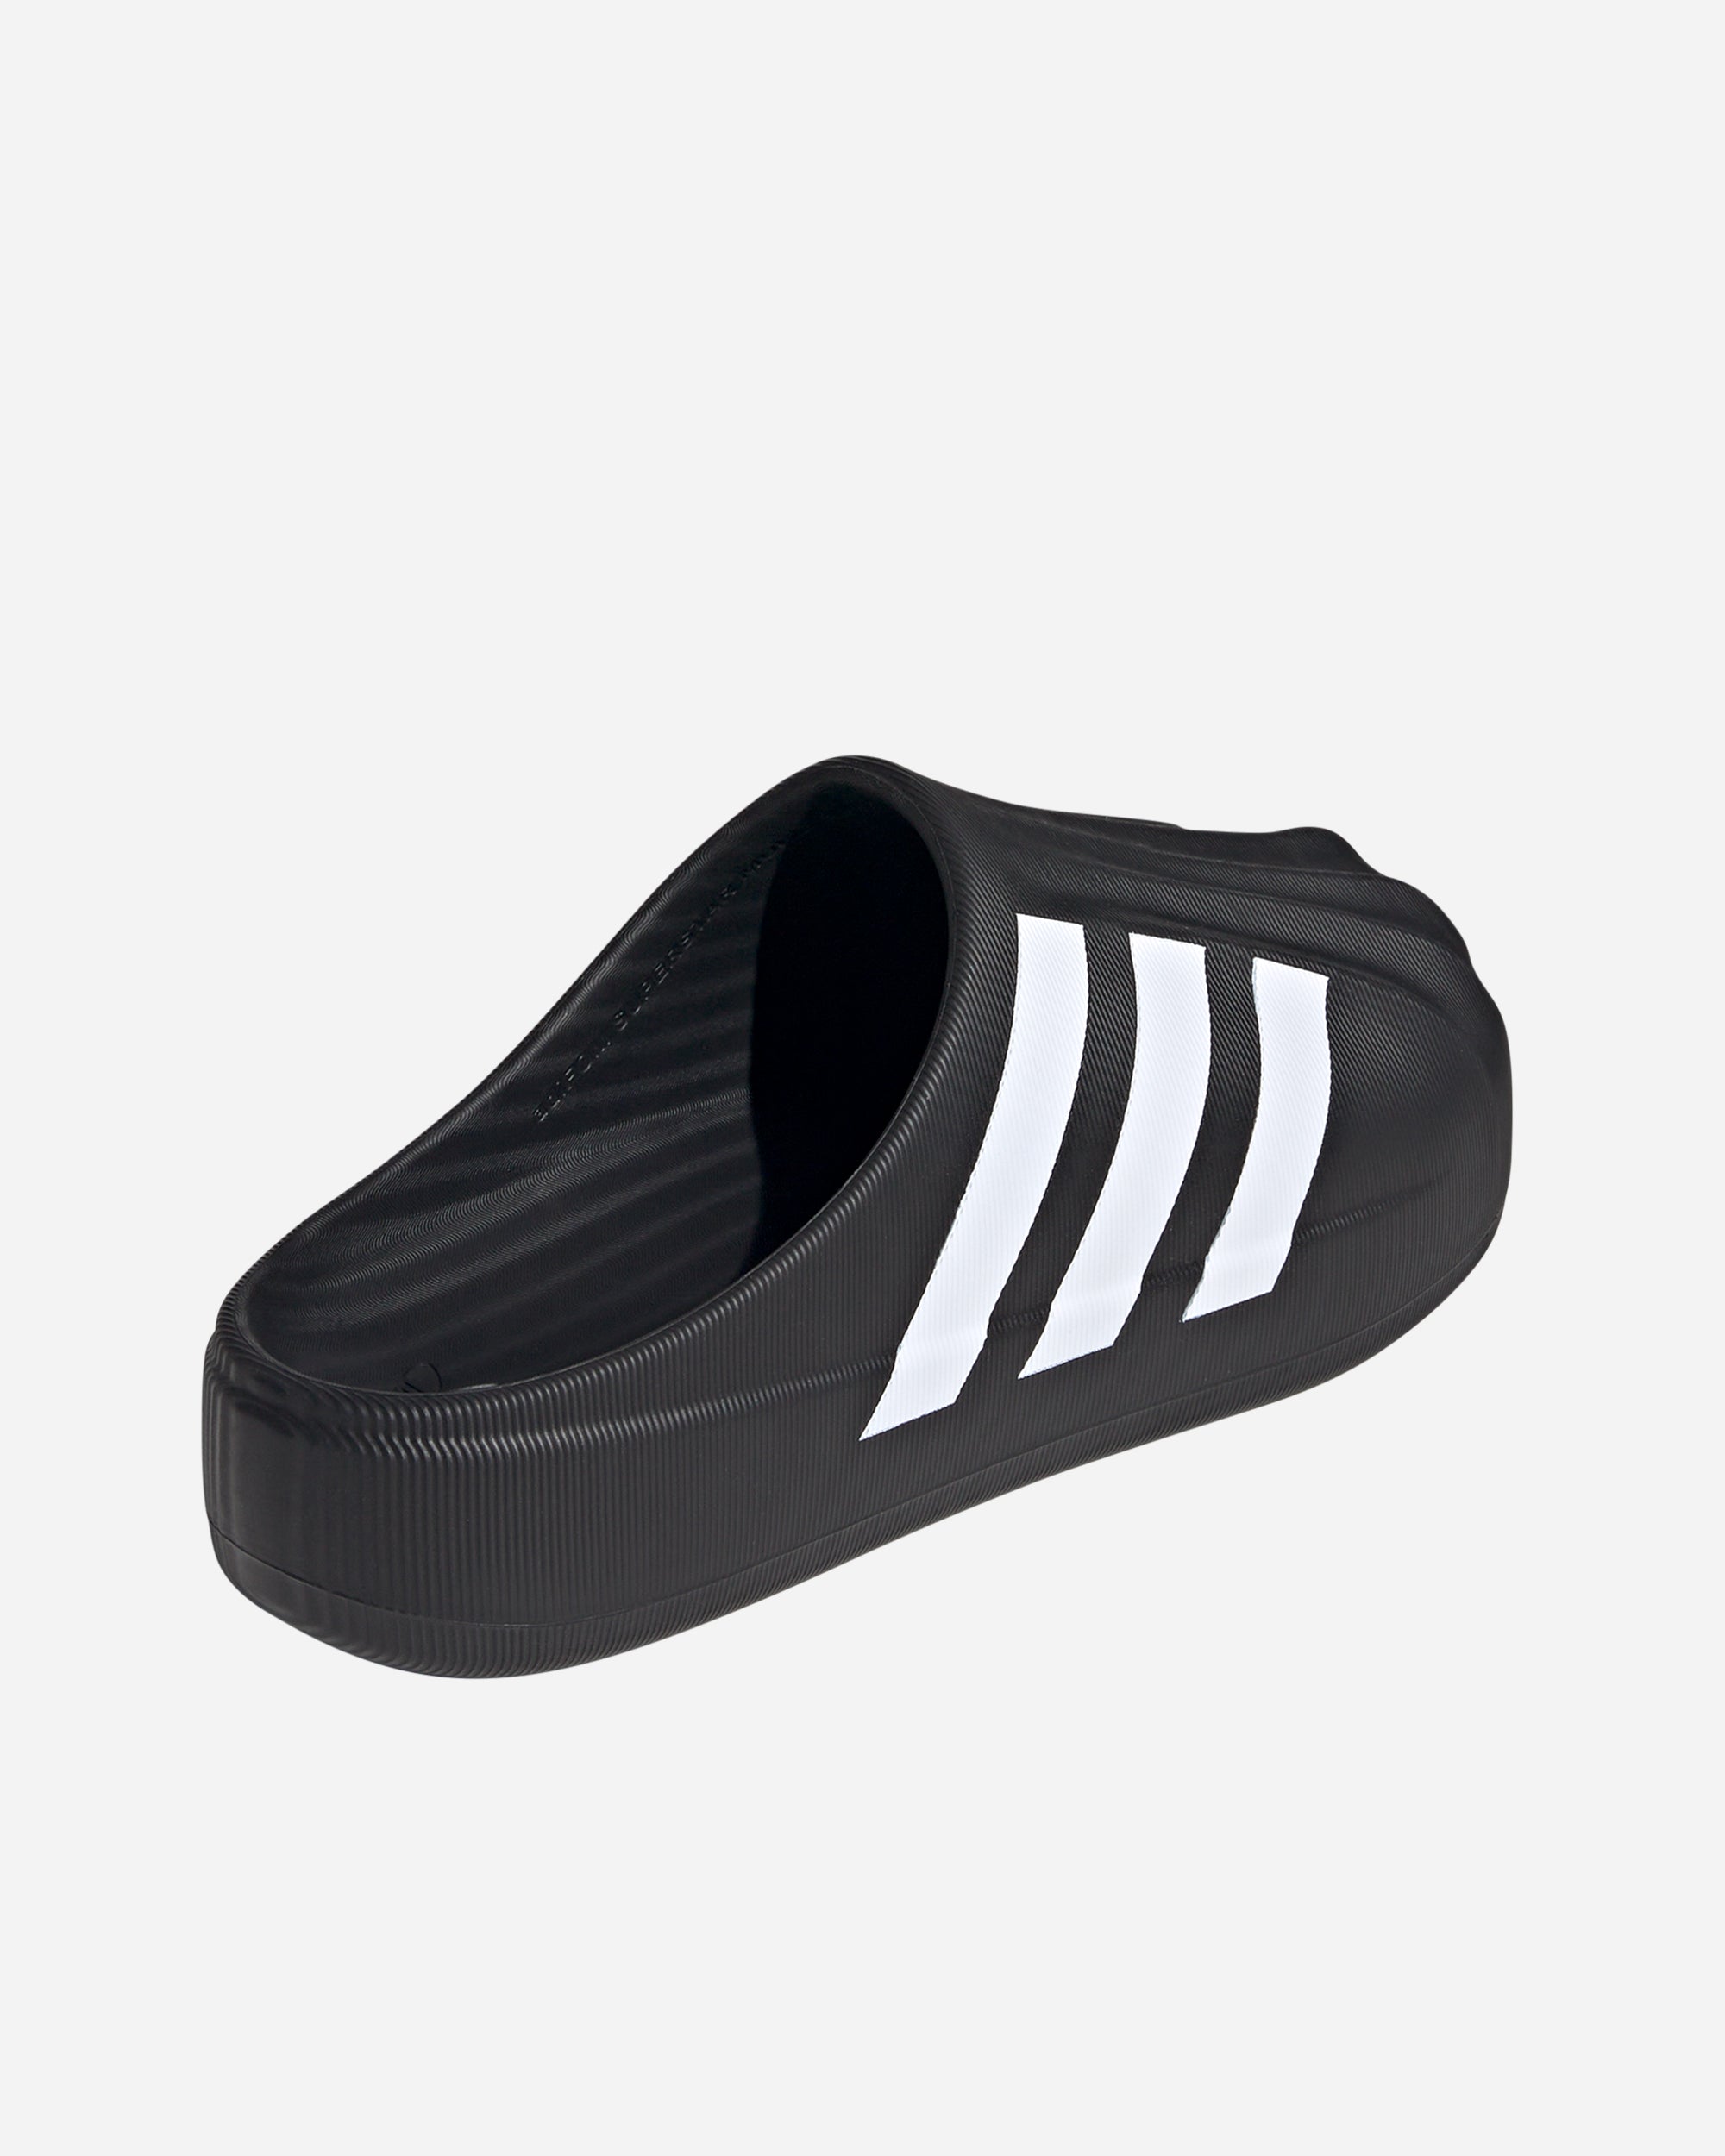 Adidas Ori adiFOM Superstar Mule BLACK/FTWWHT IG8277